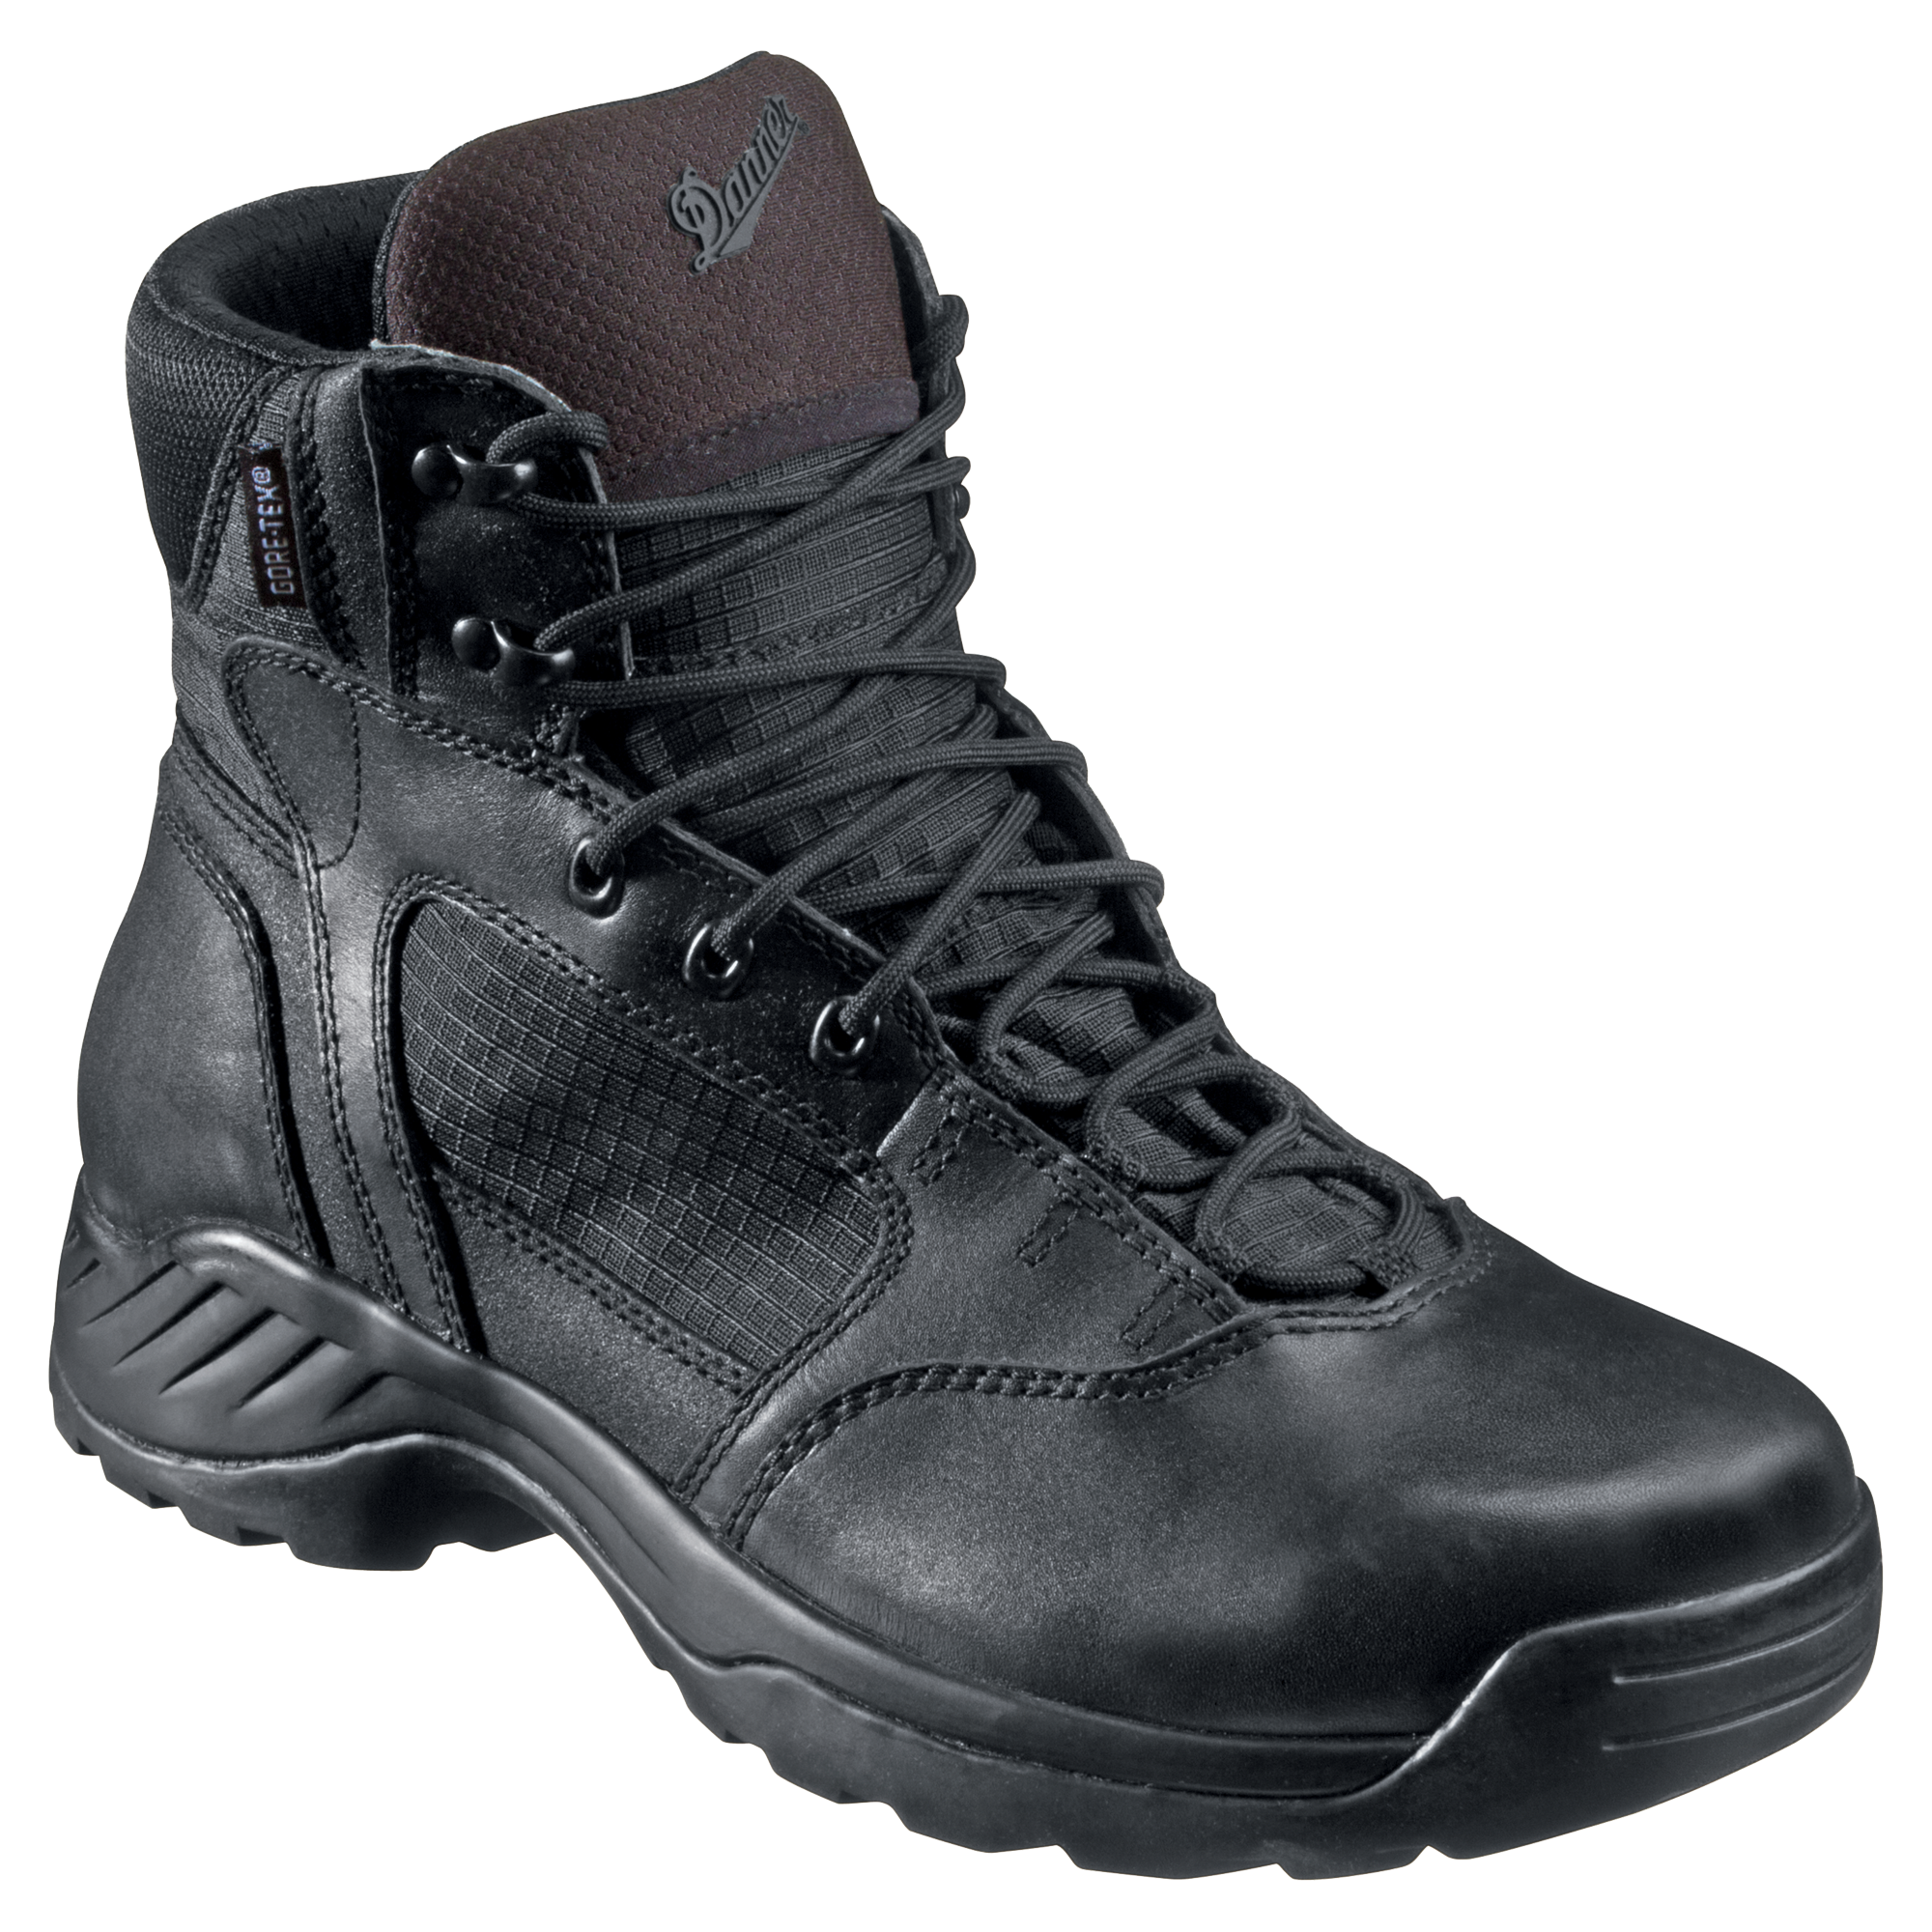 Danner Kinetic Side-Zip GORE-TEX Work Boots for Men - Black - 9.5W